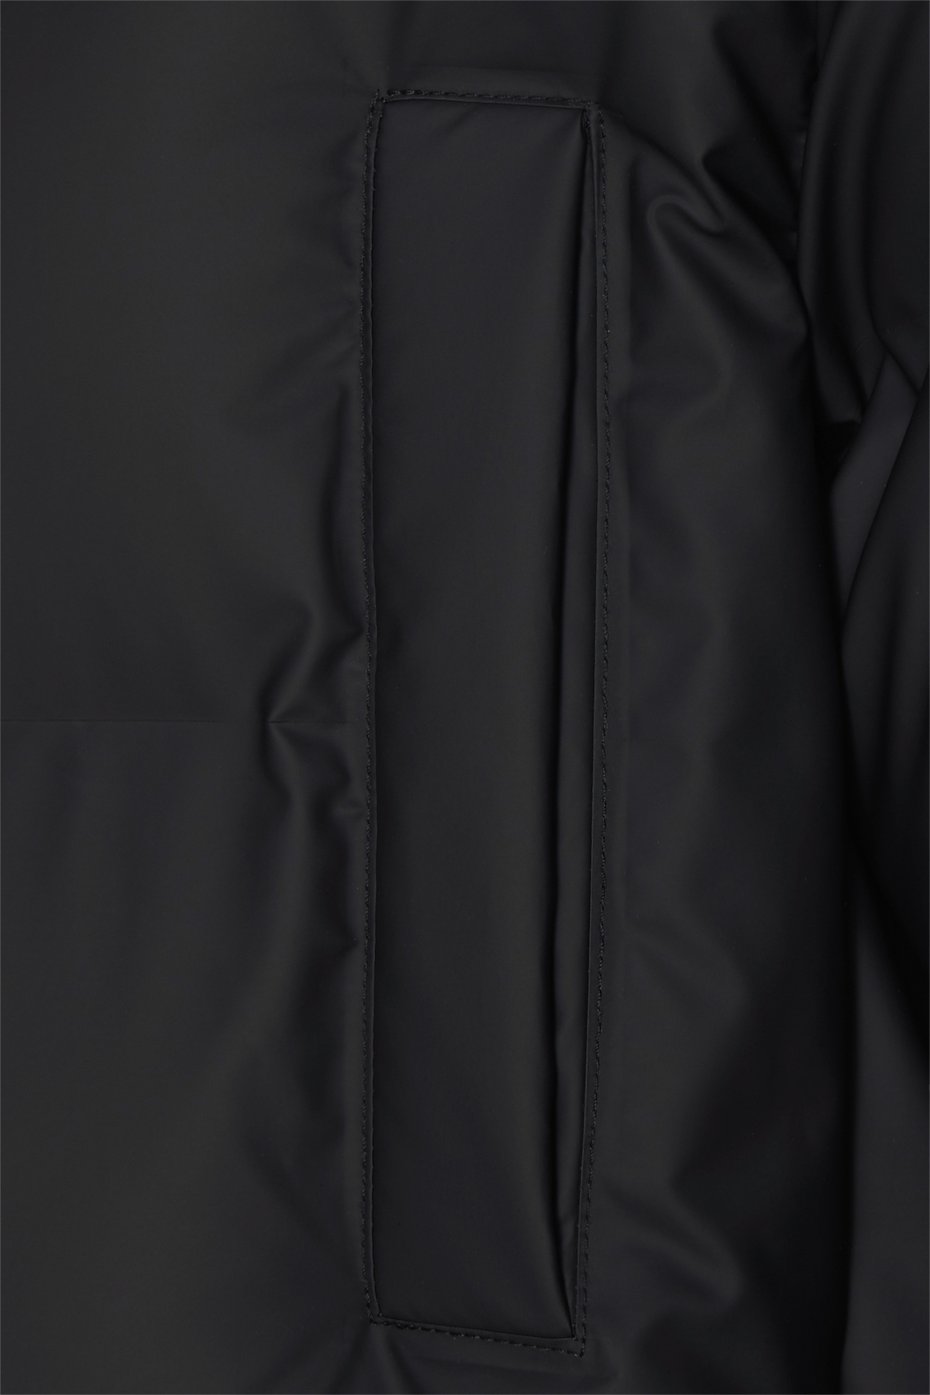 Hooded Puffer Coat - Black